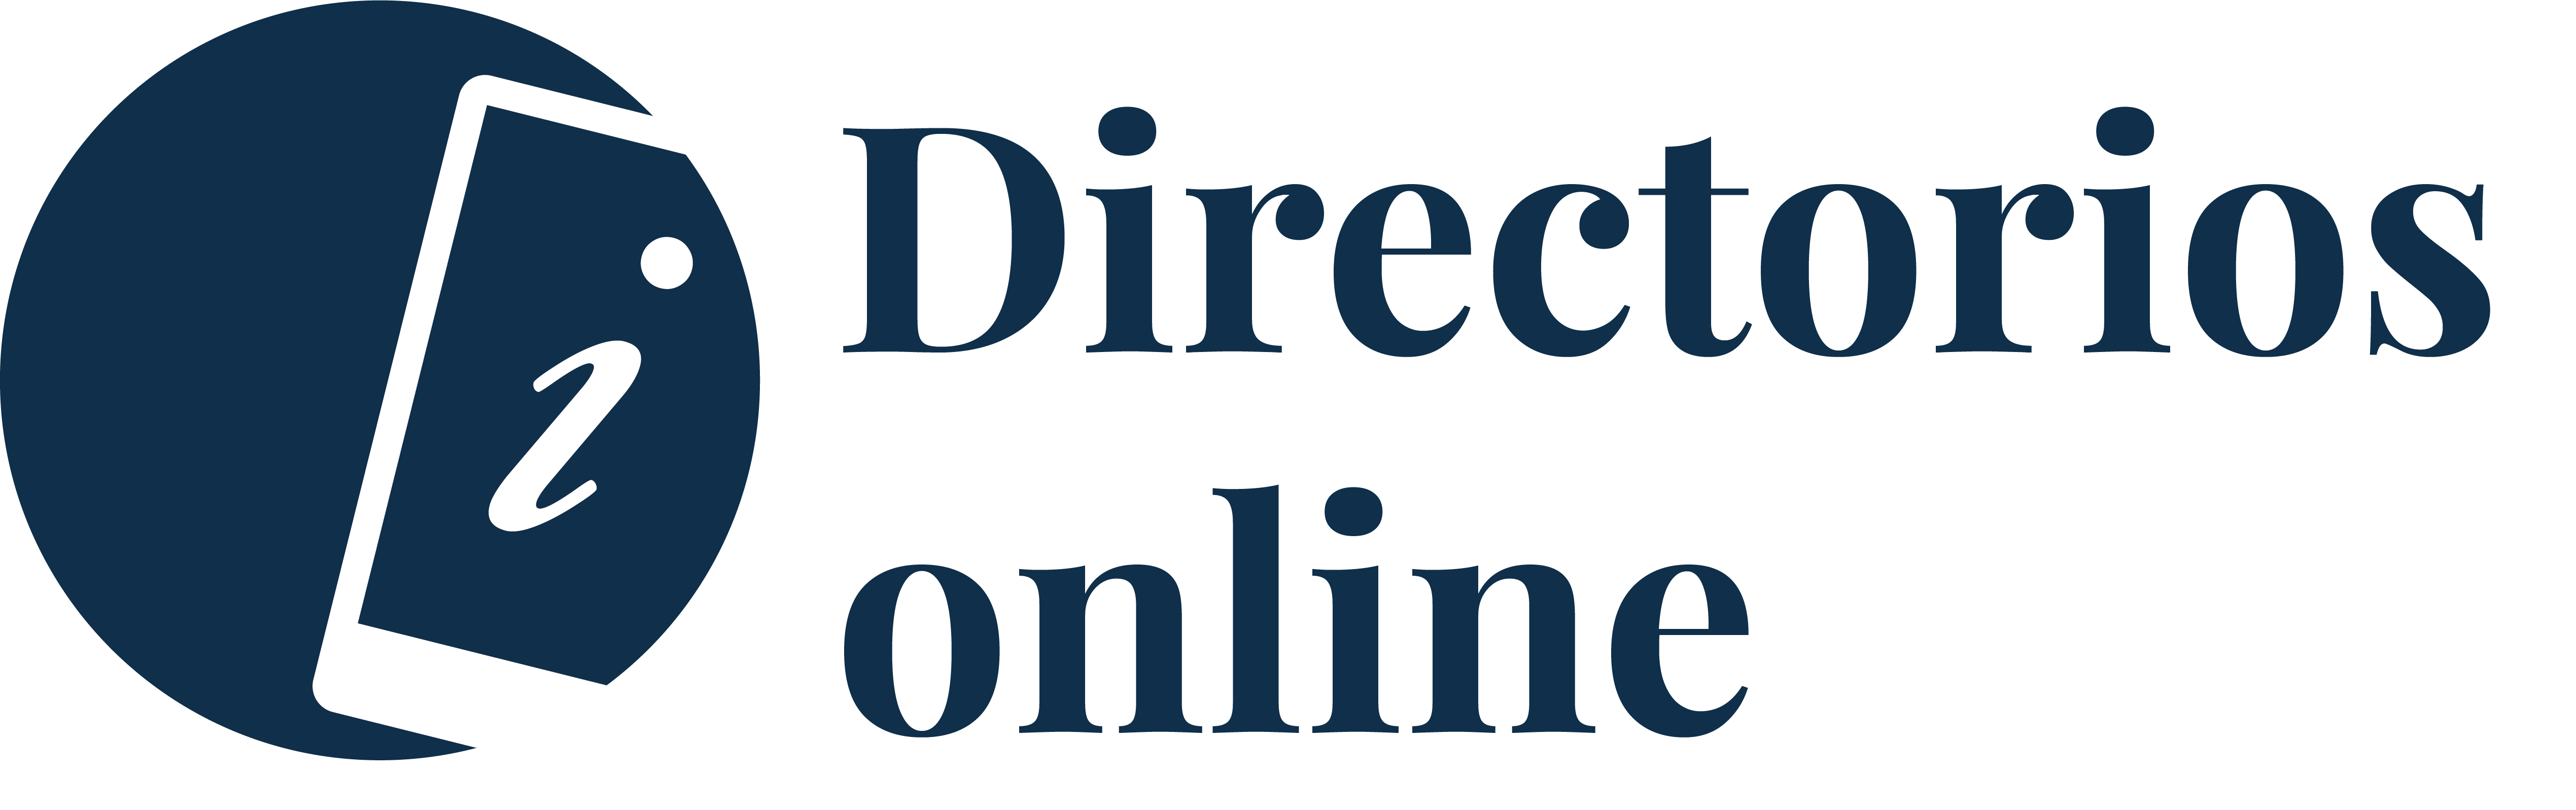 directorios online logo